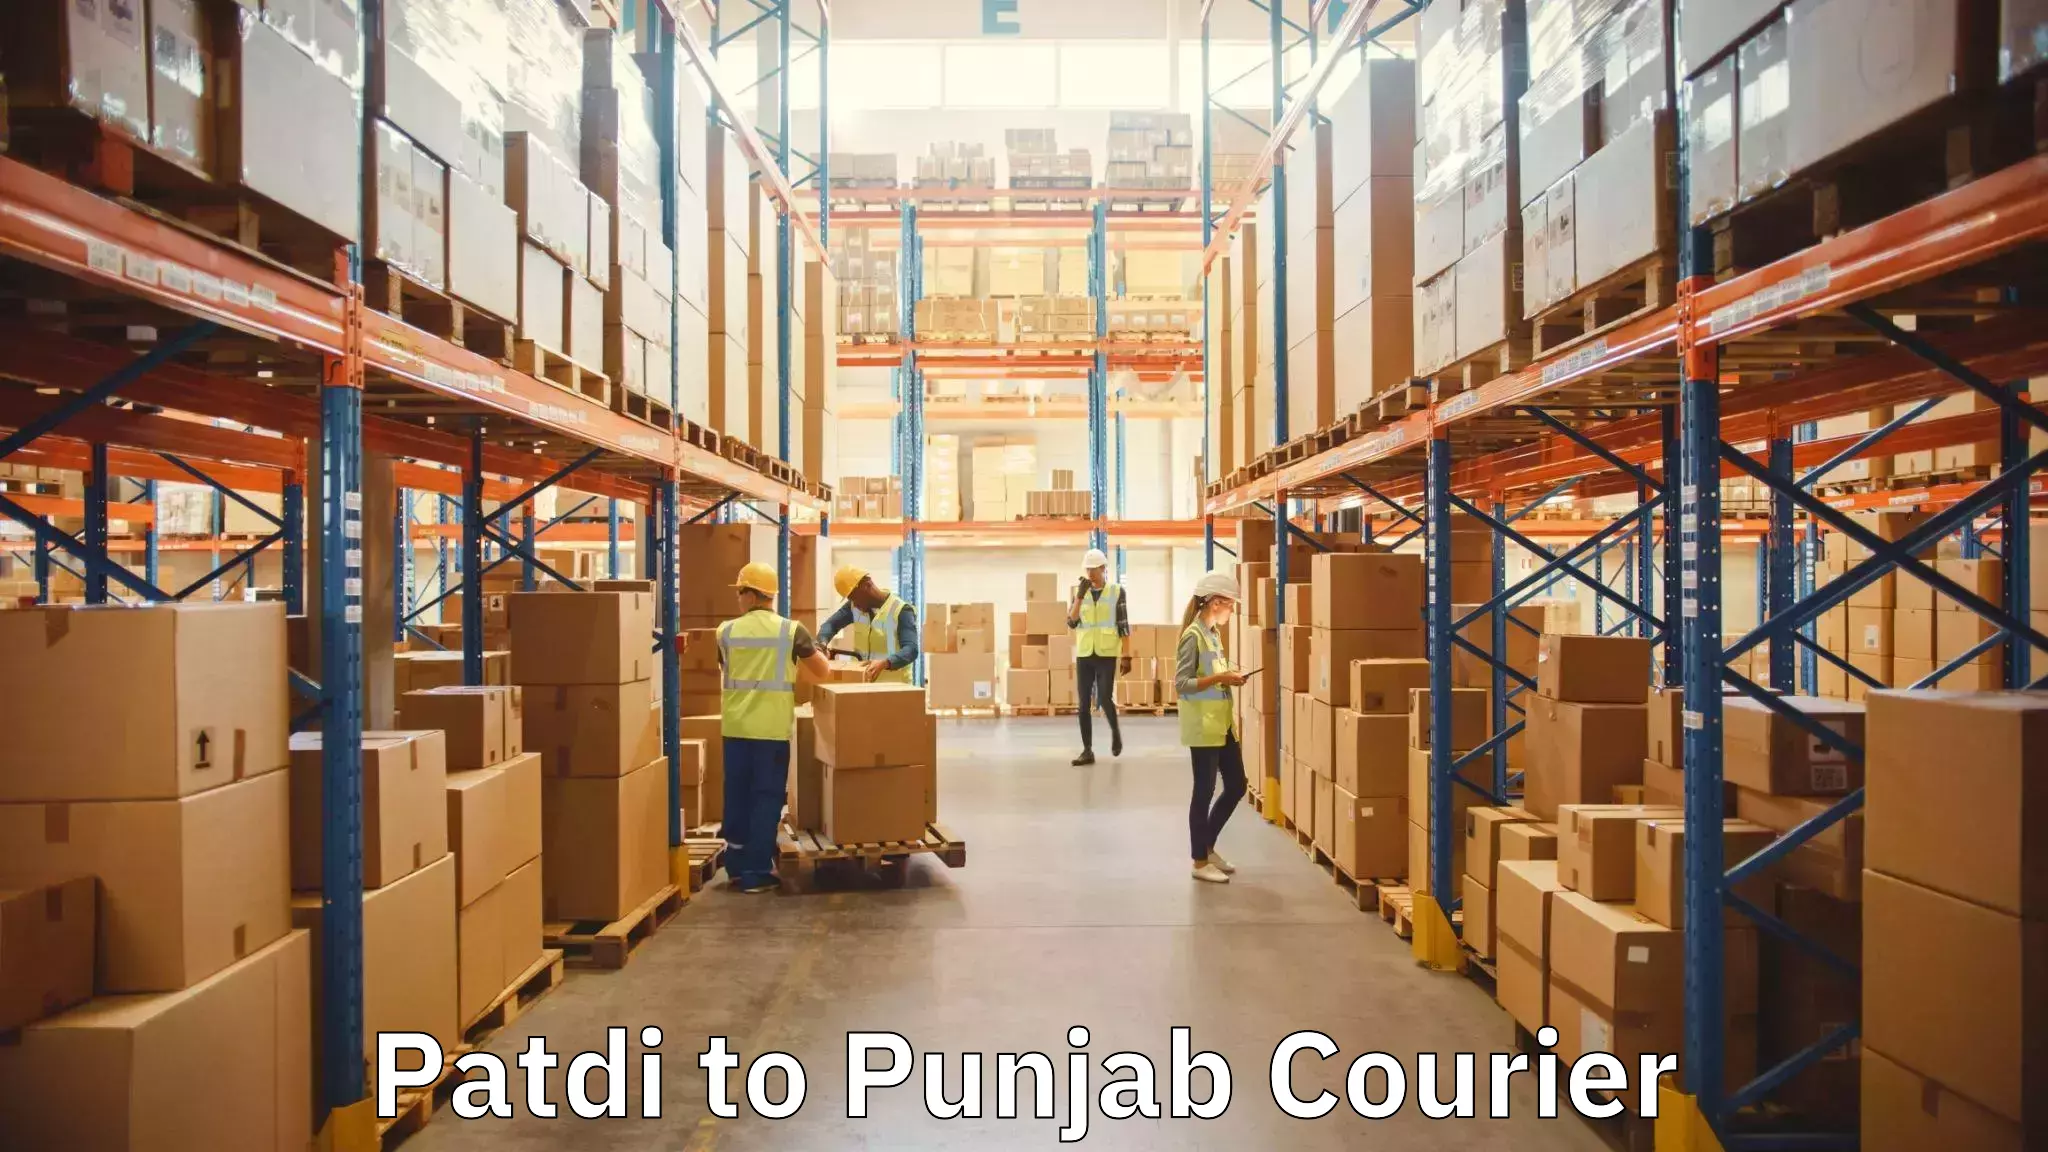 Professional furniture movers Patdi to Punjab